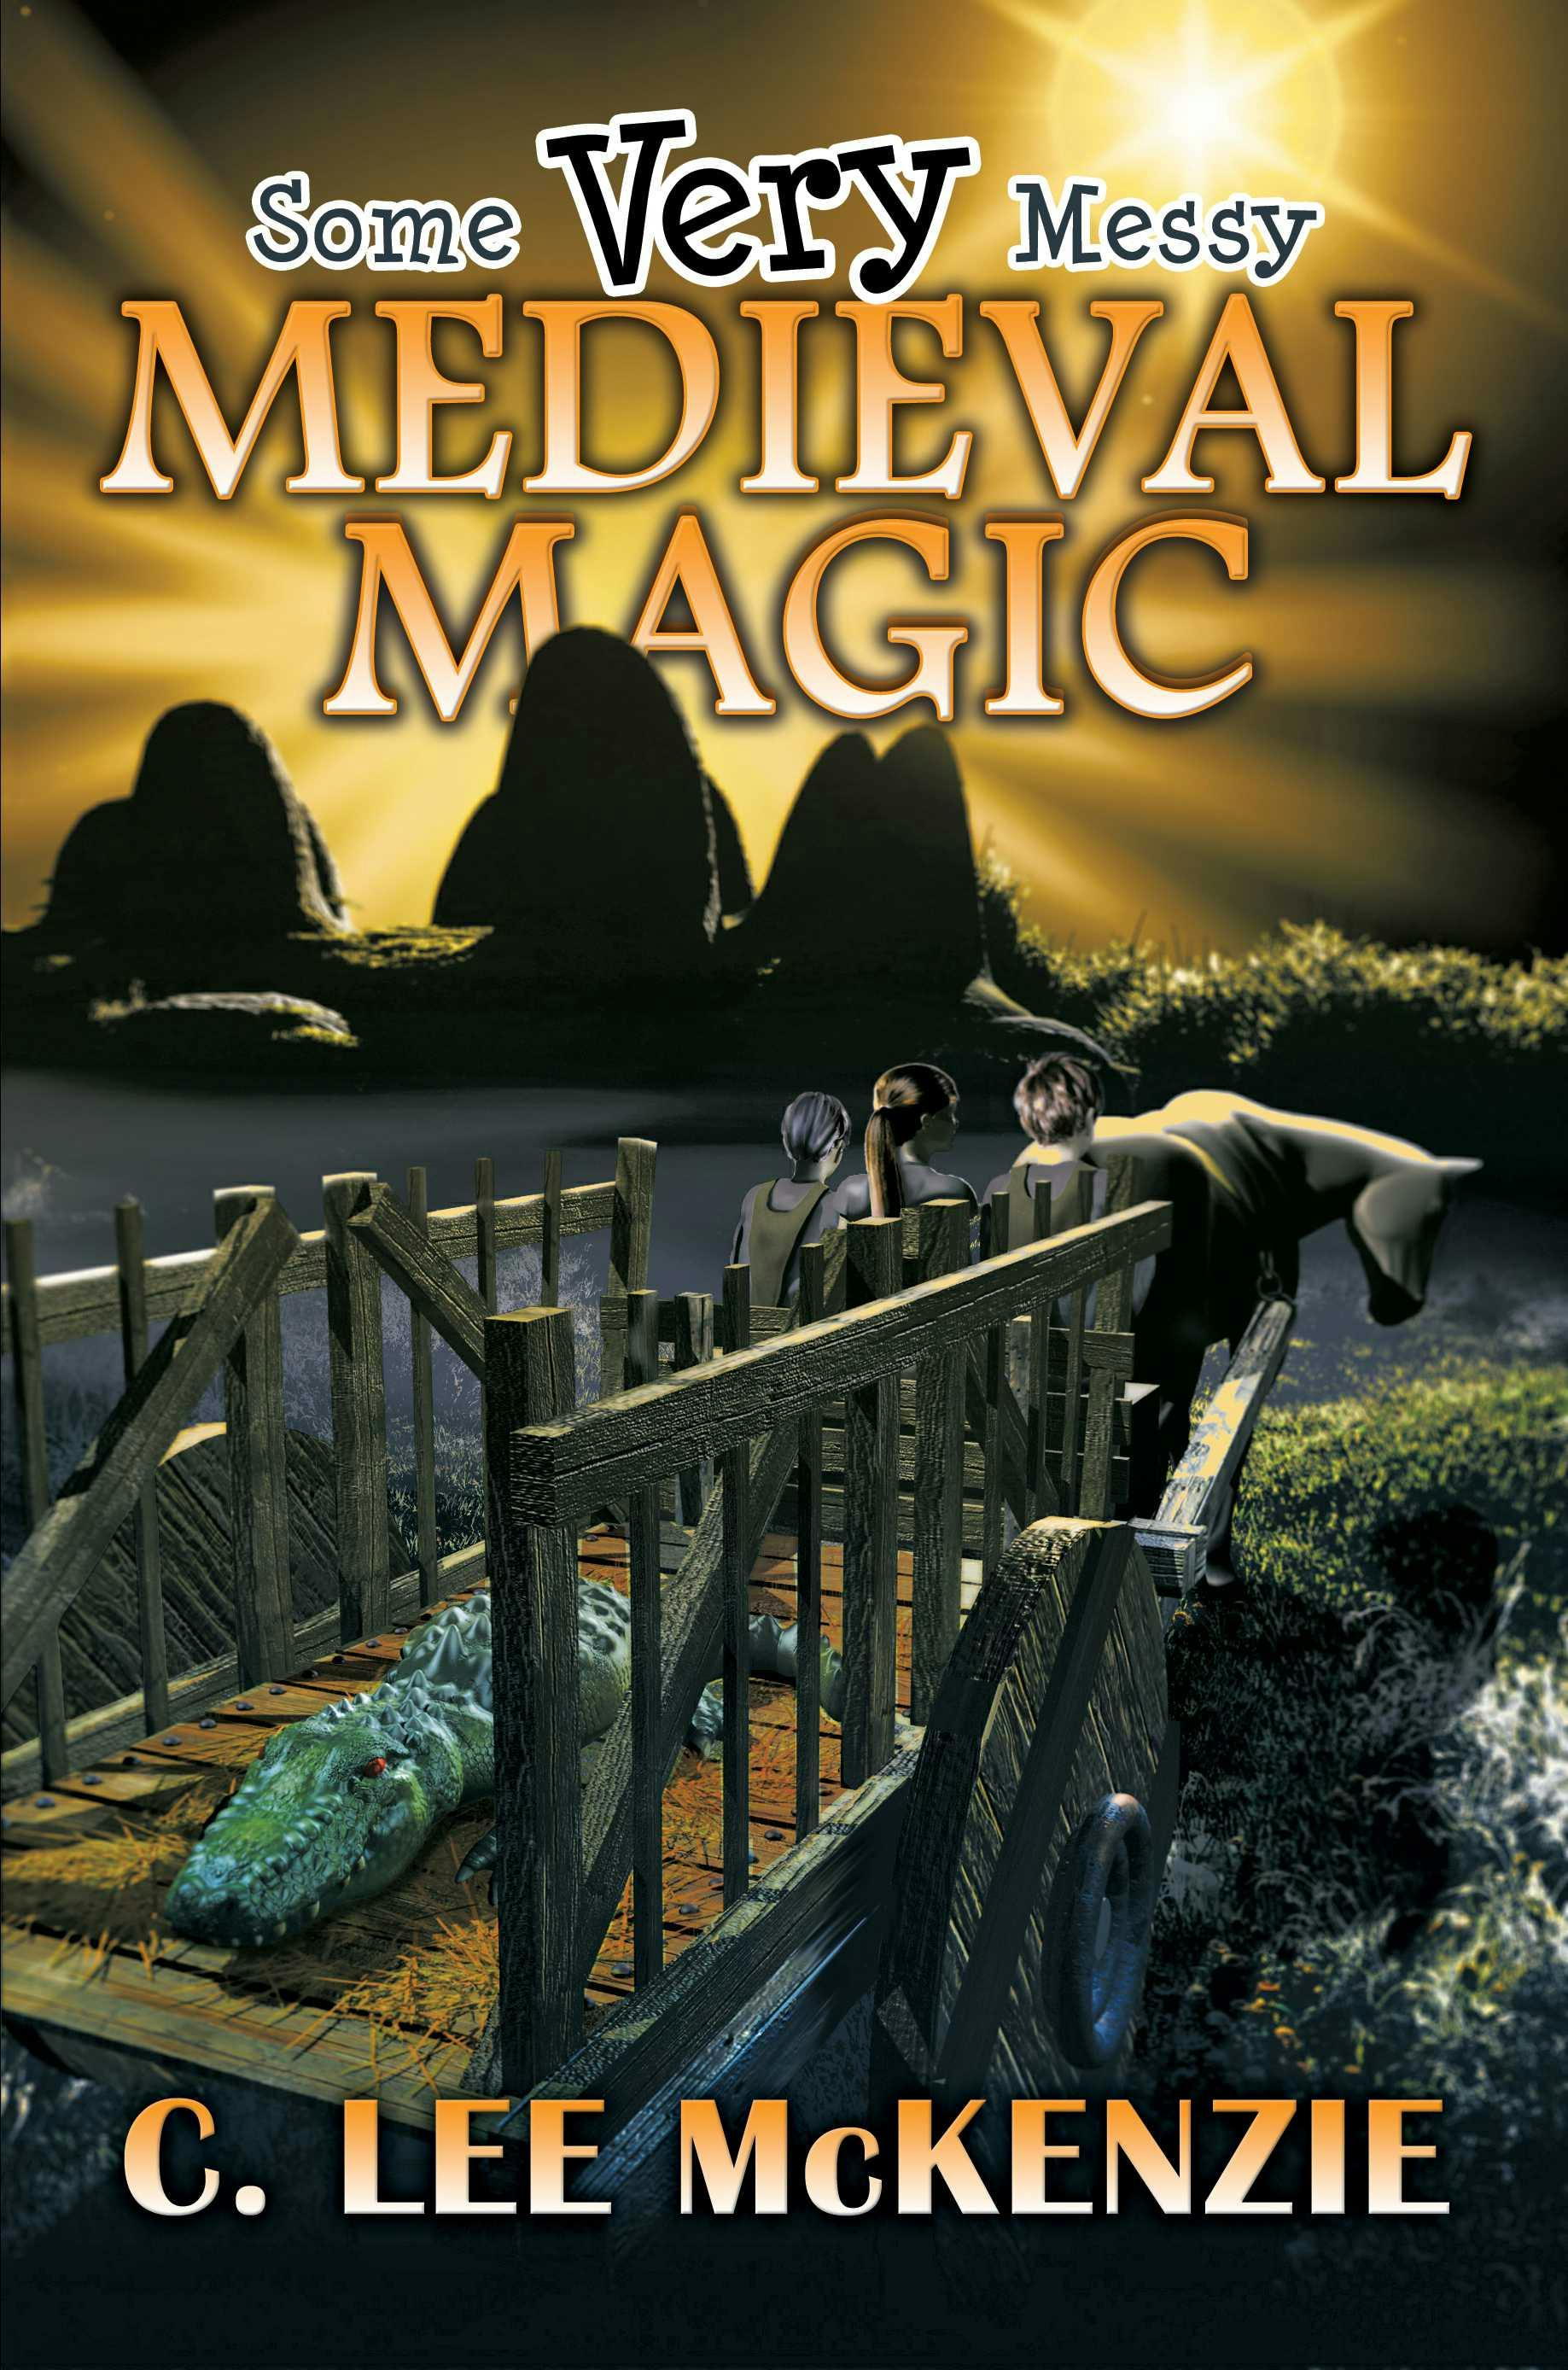 Some Very Messy Medieval Magic - C. Lee McKenzie